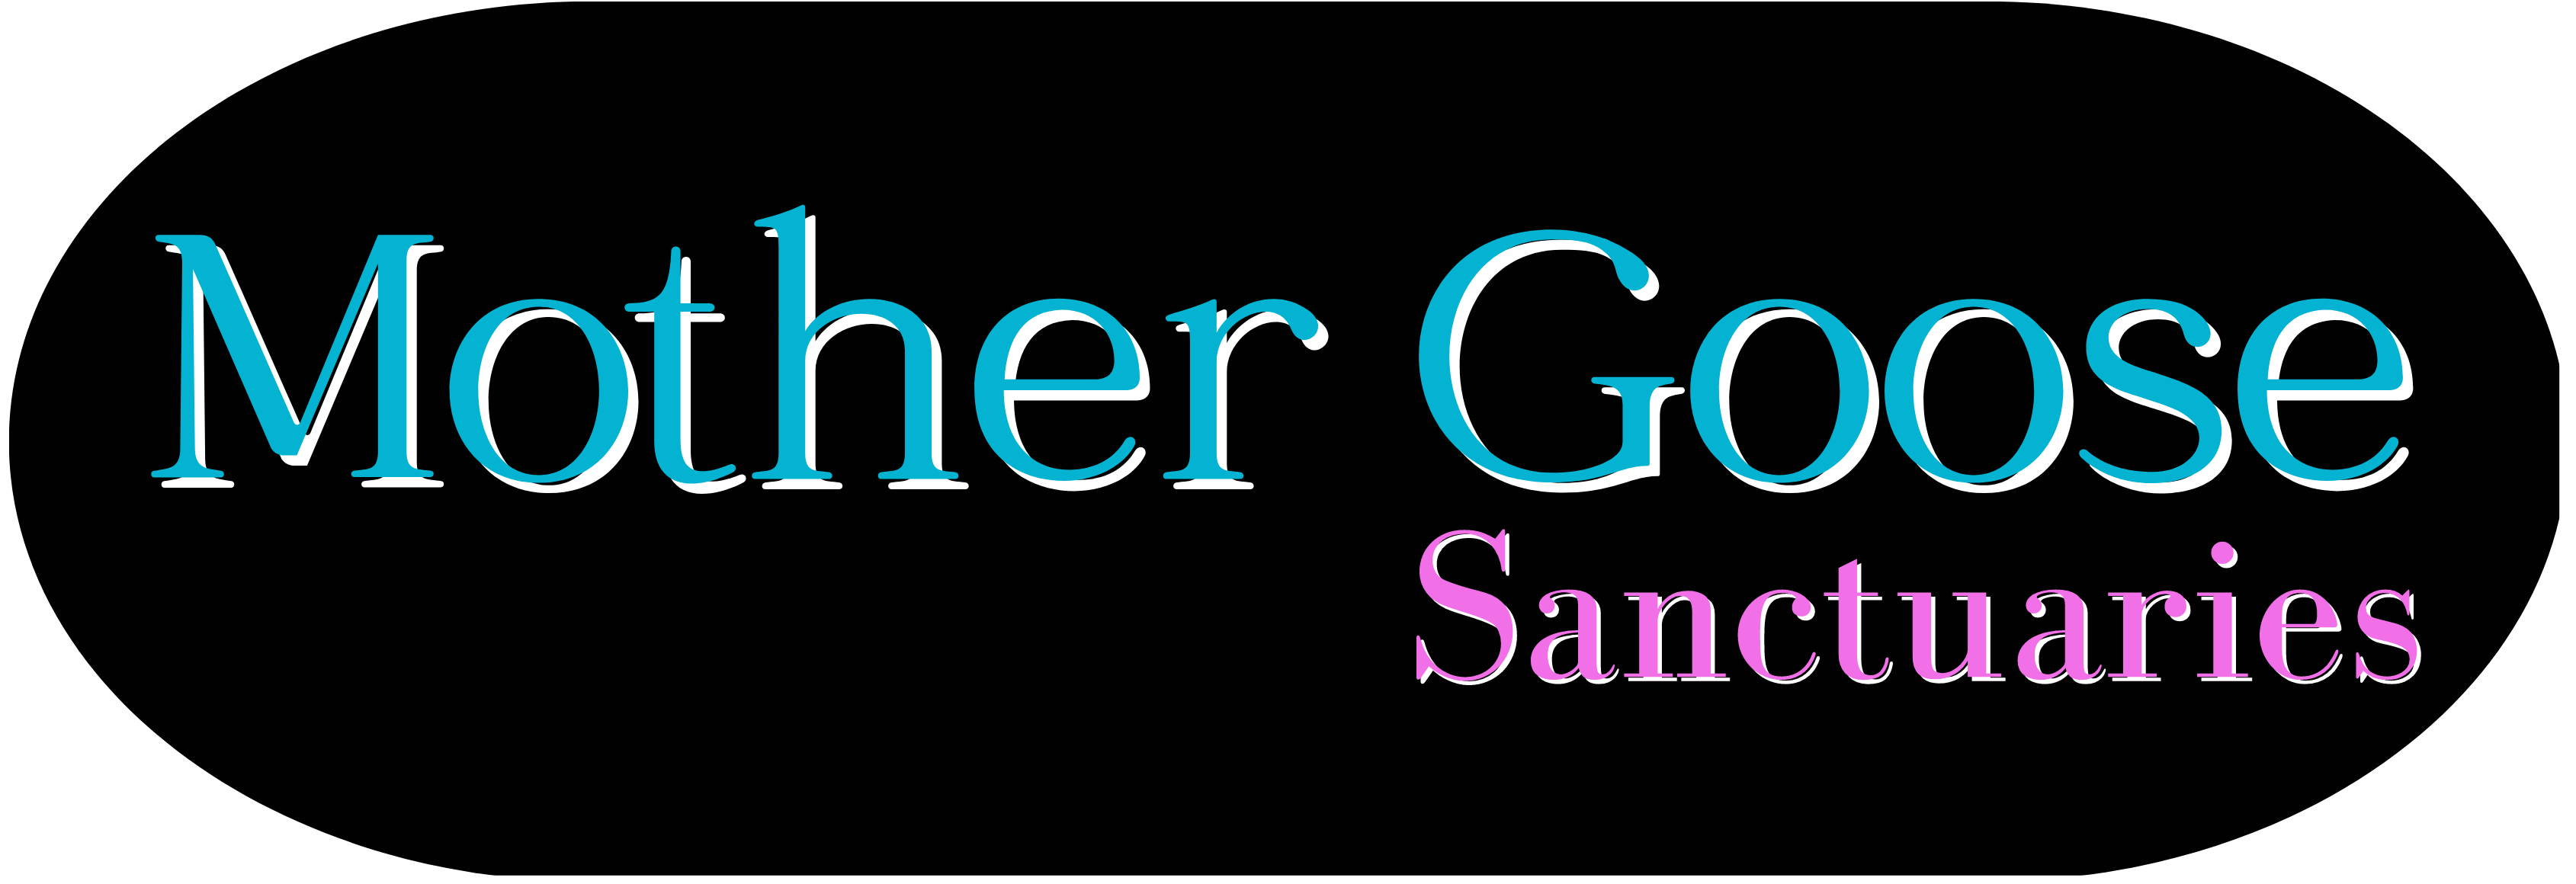 Mother Goose Sanctuaries logo